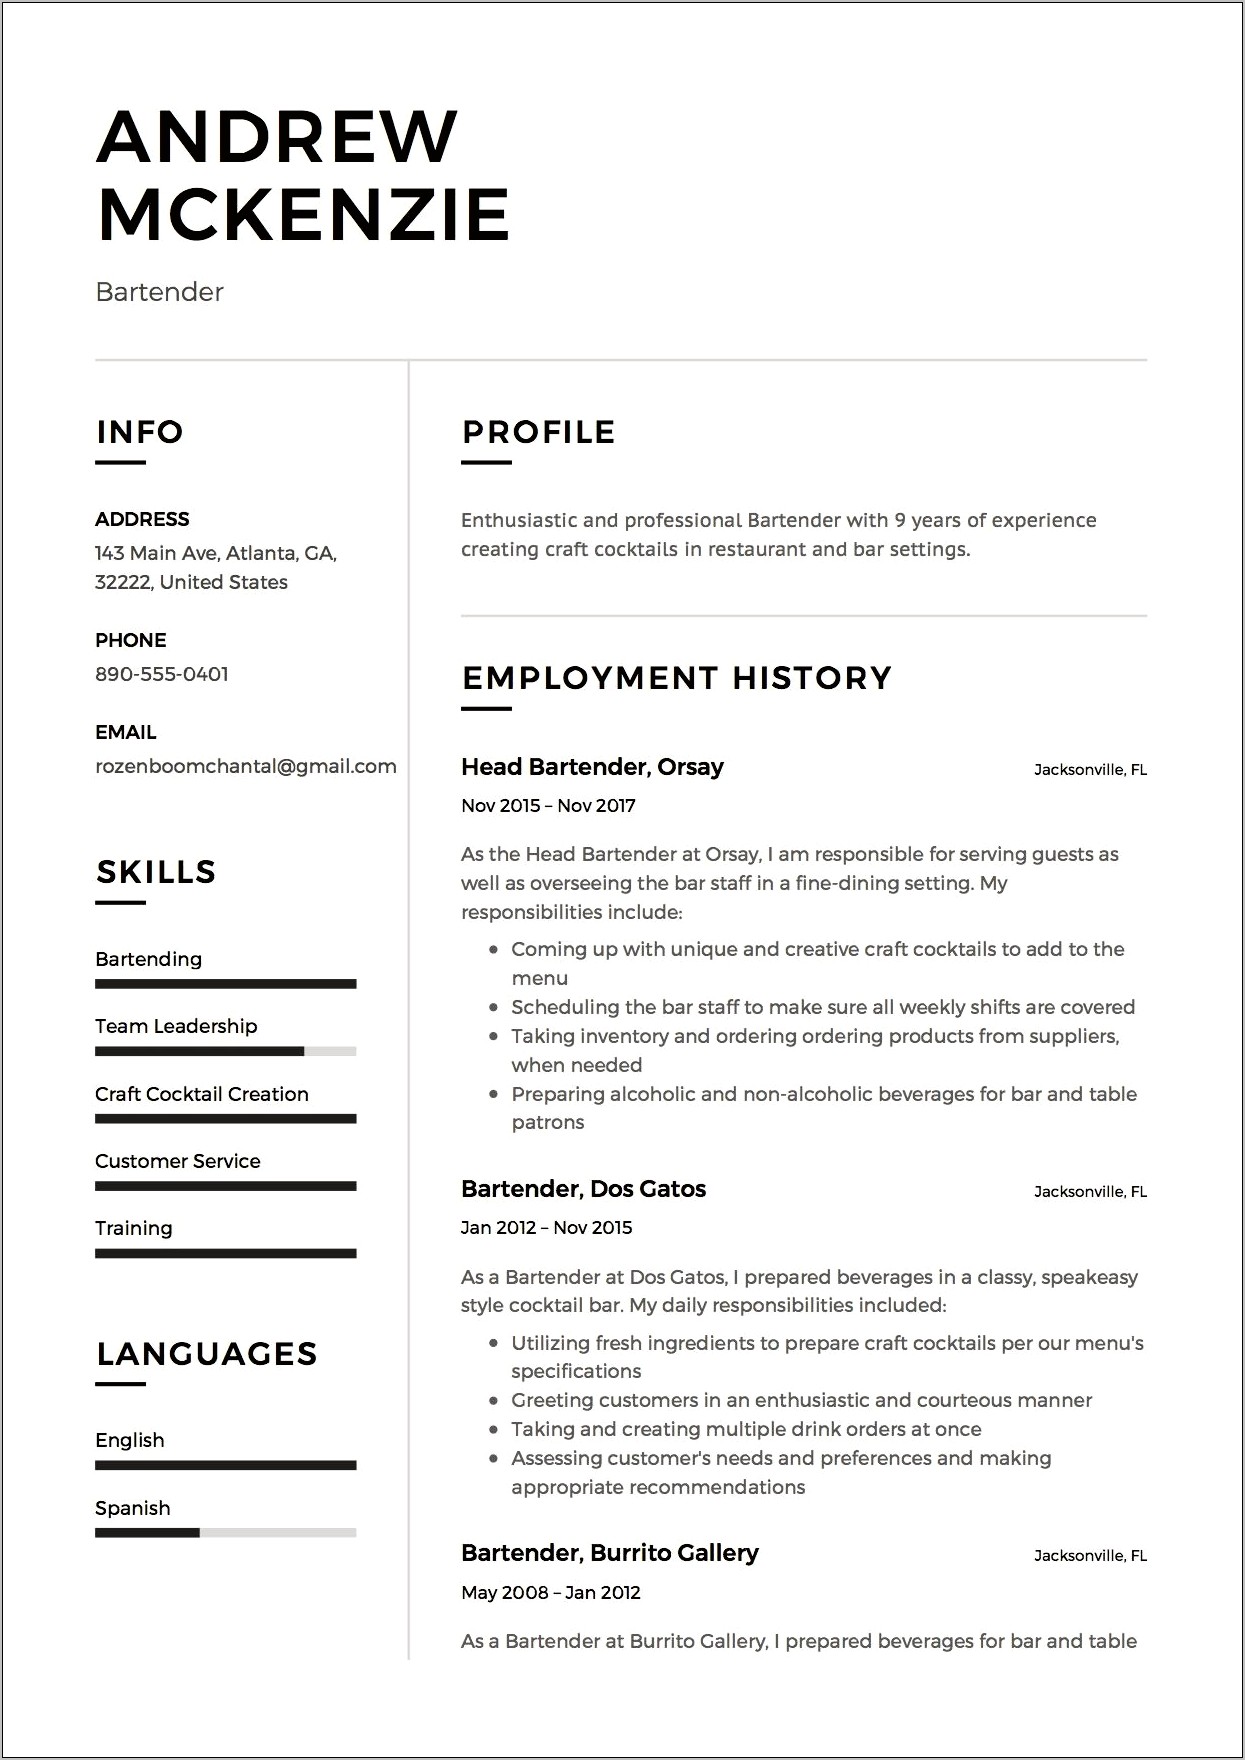 Resume Job Description For Hotel Bartender